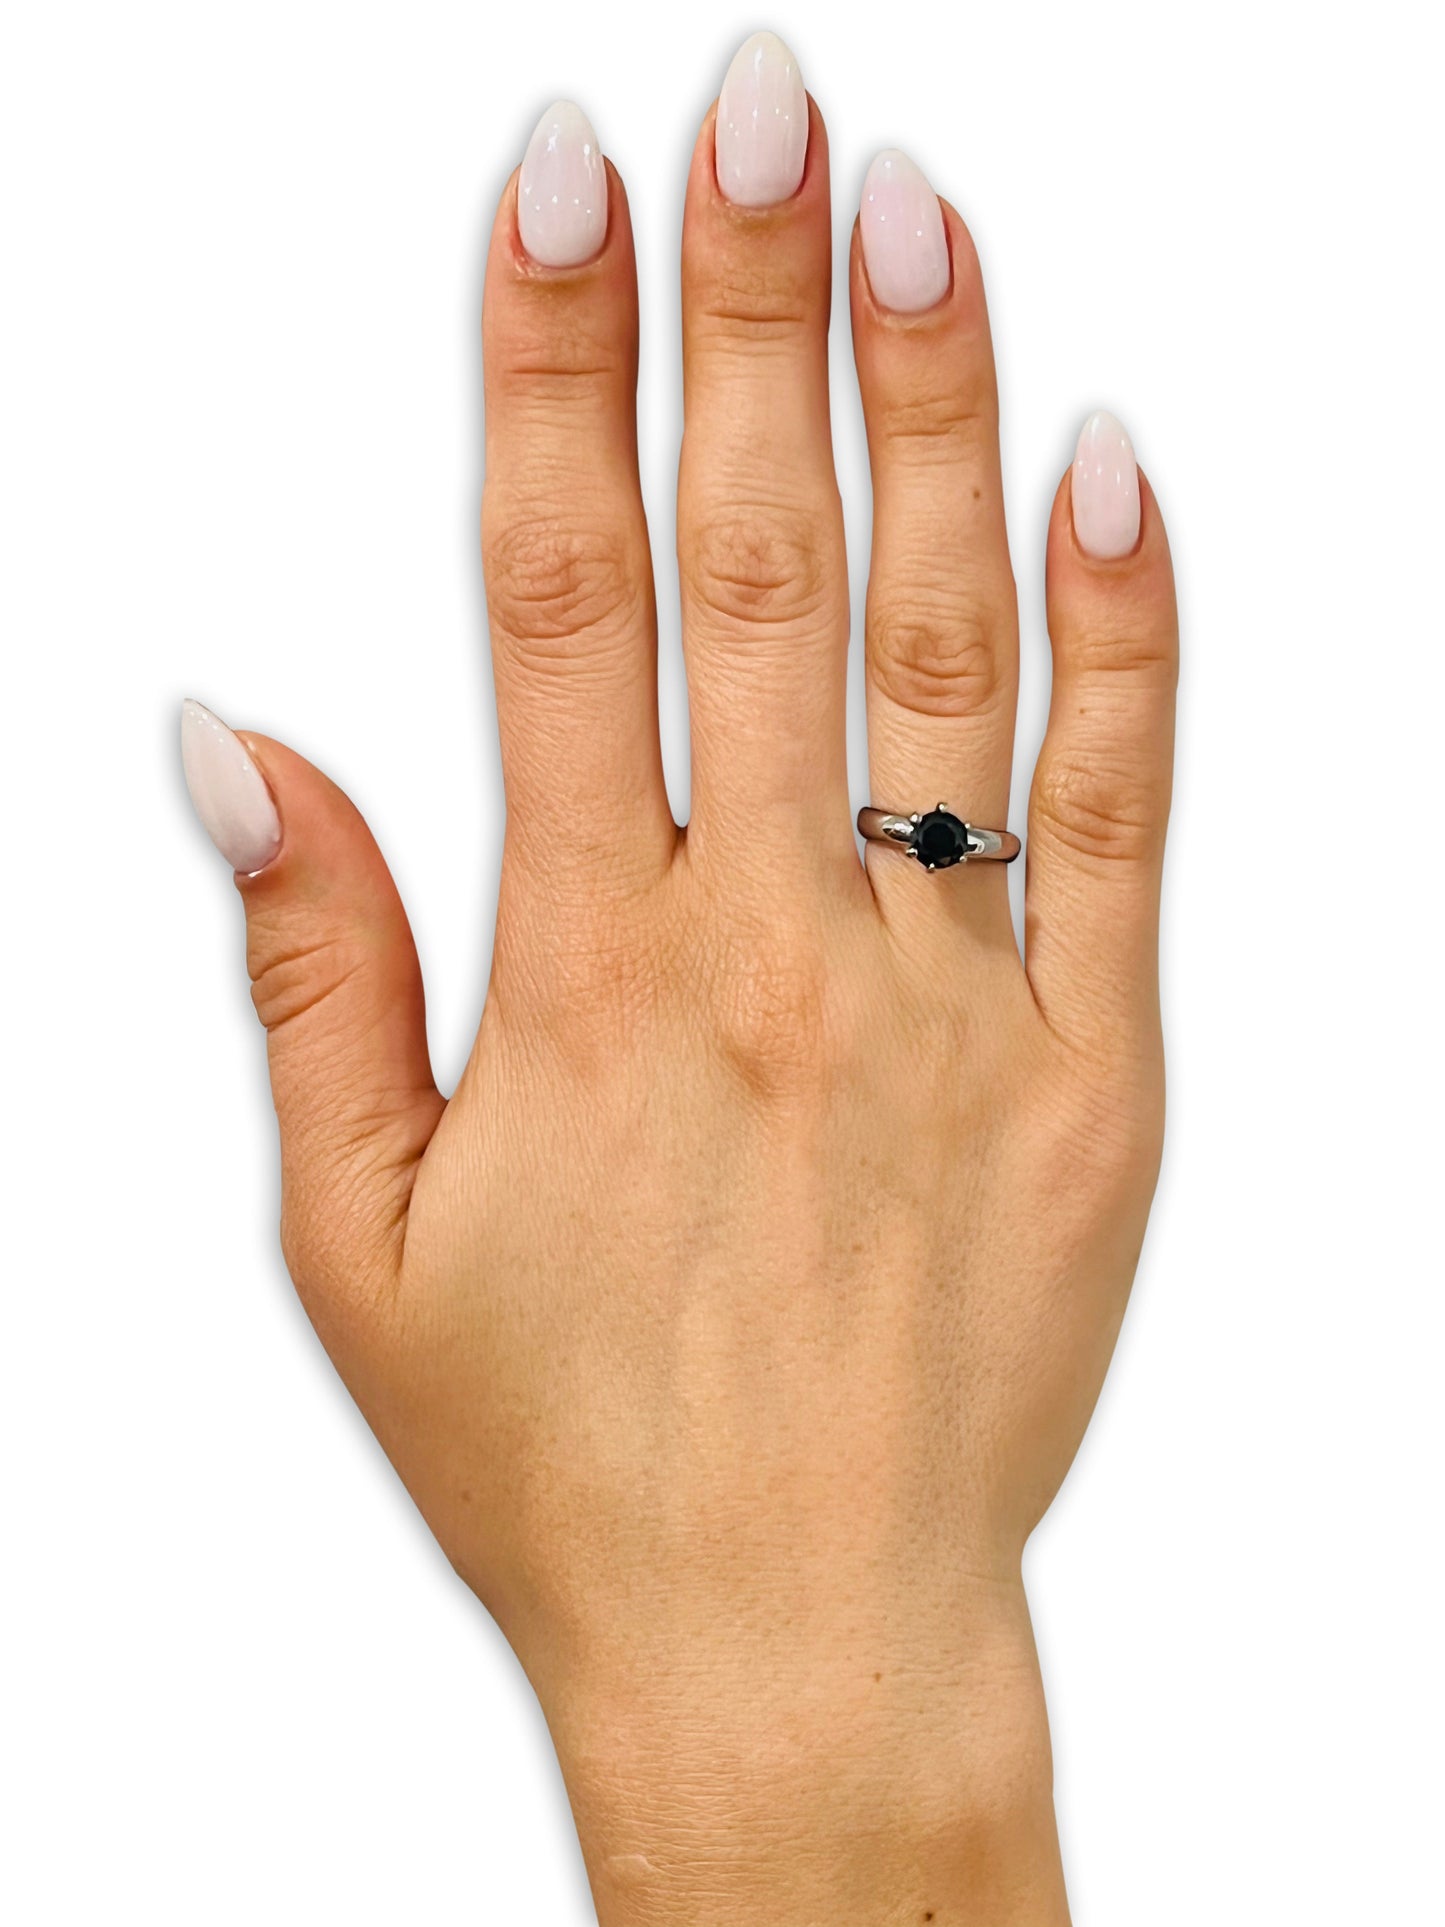 Solitaire Wedding Ring Titanium Wedding Ring Engagement Ring Anniversary